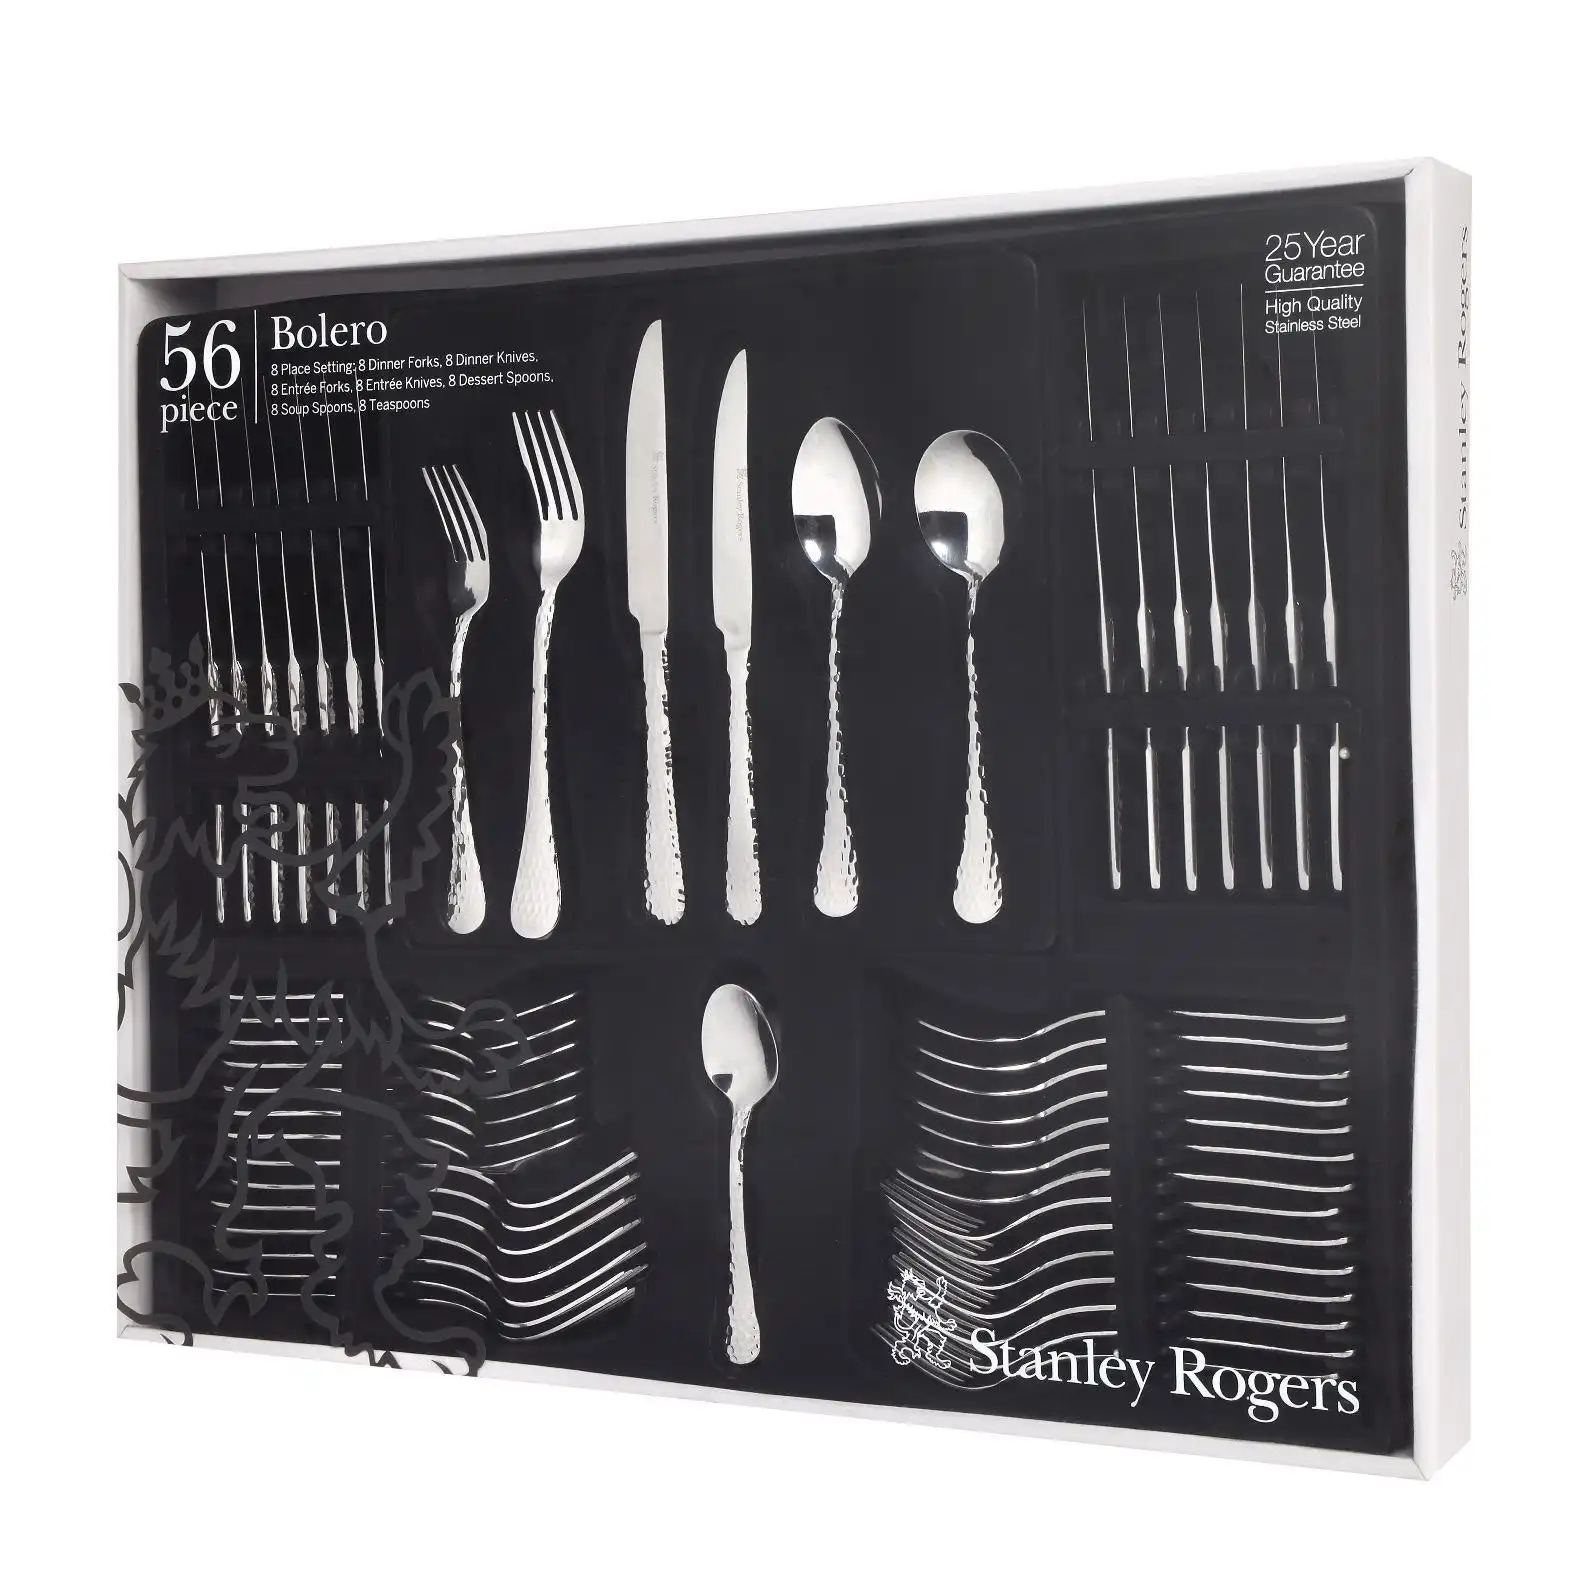 Stanley Rogers 56 Piece Bolero Cutlery Gift Boxed Set